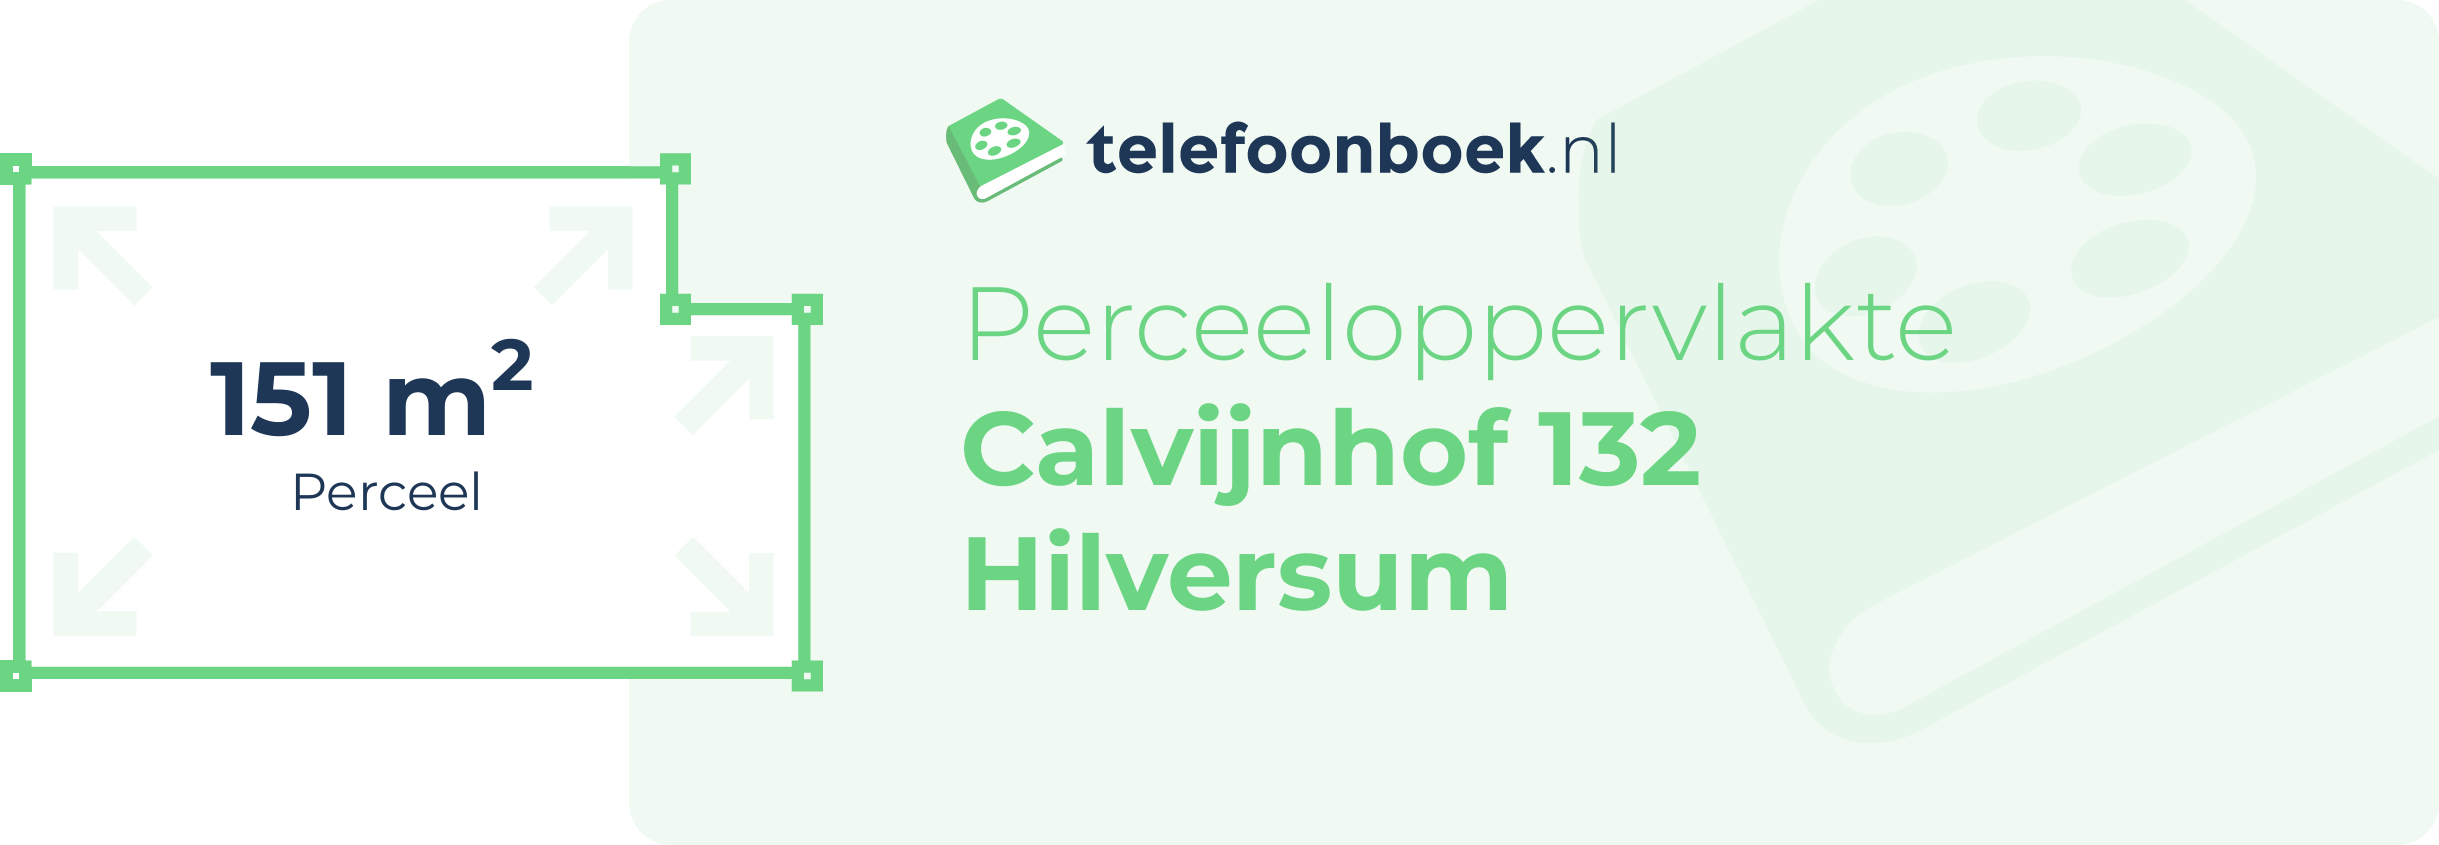 Perceeloppervlakte Calvijnhof 132 Hilversum